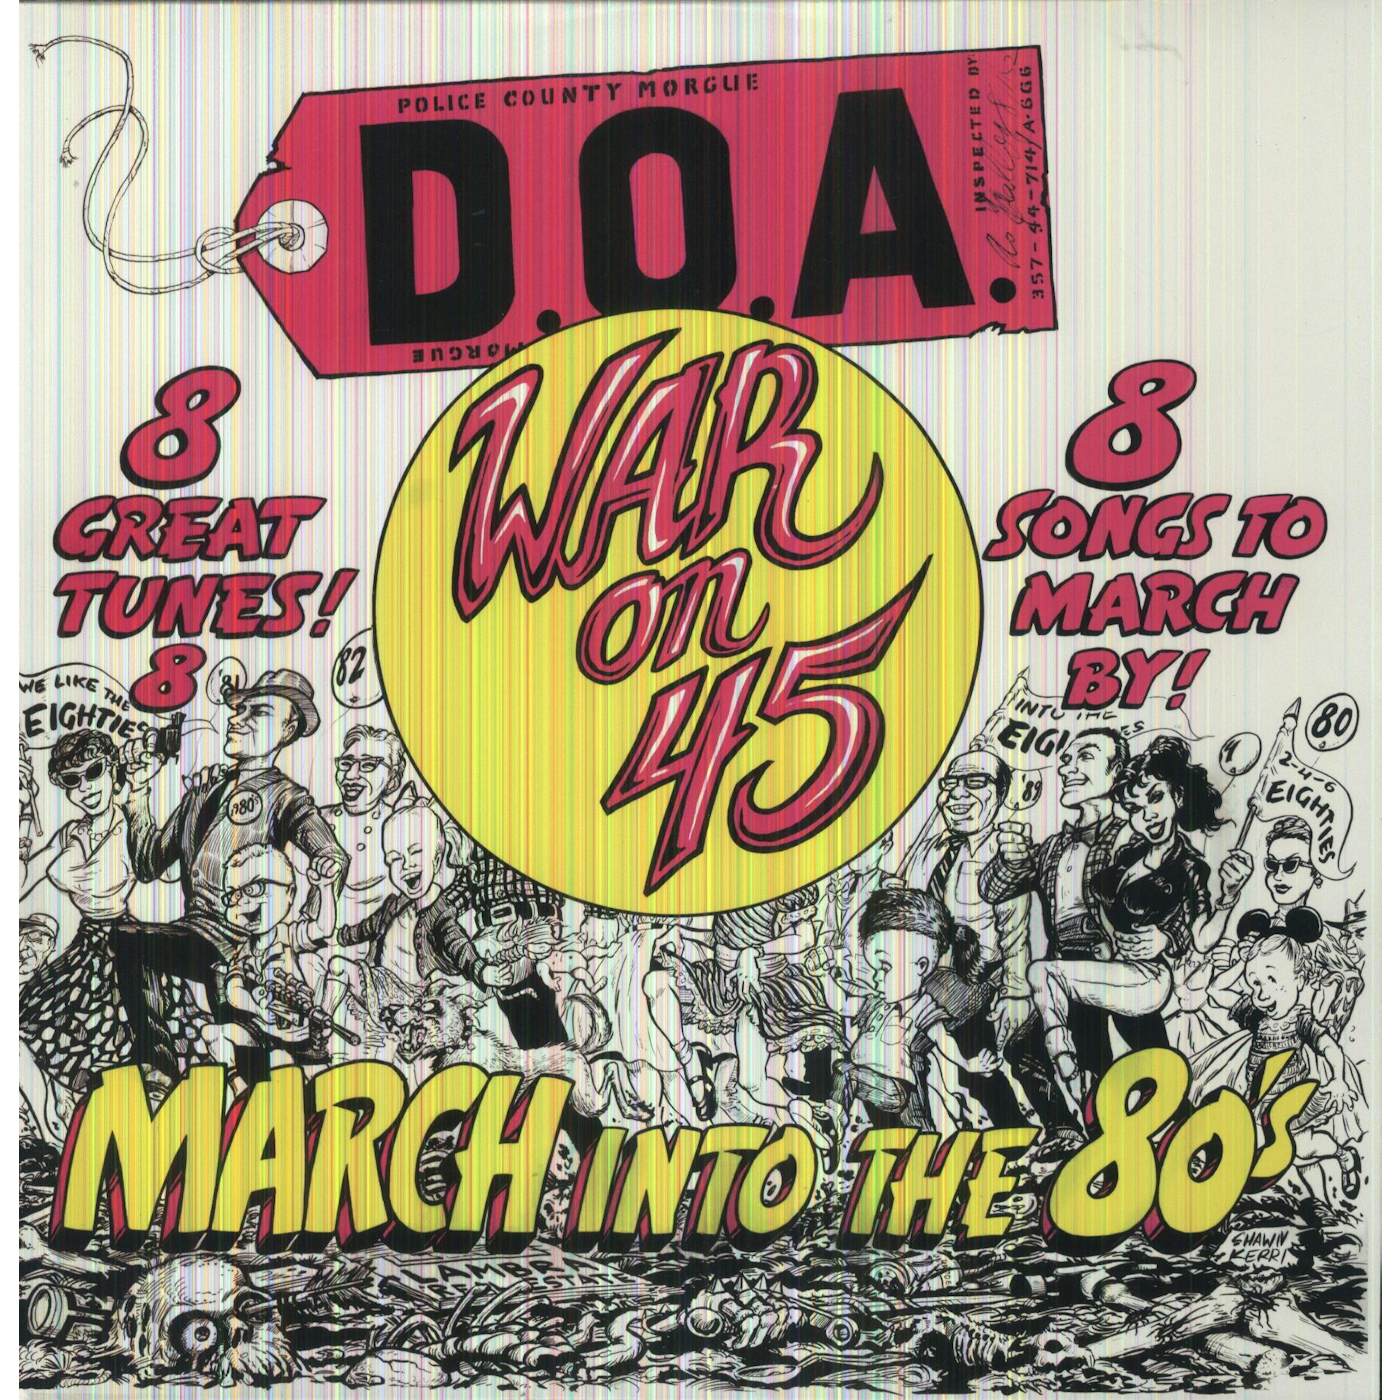 D.O.A. War On 45 Vinyl Record